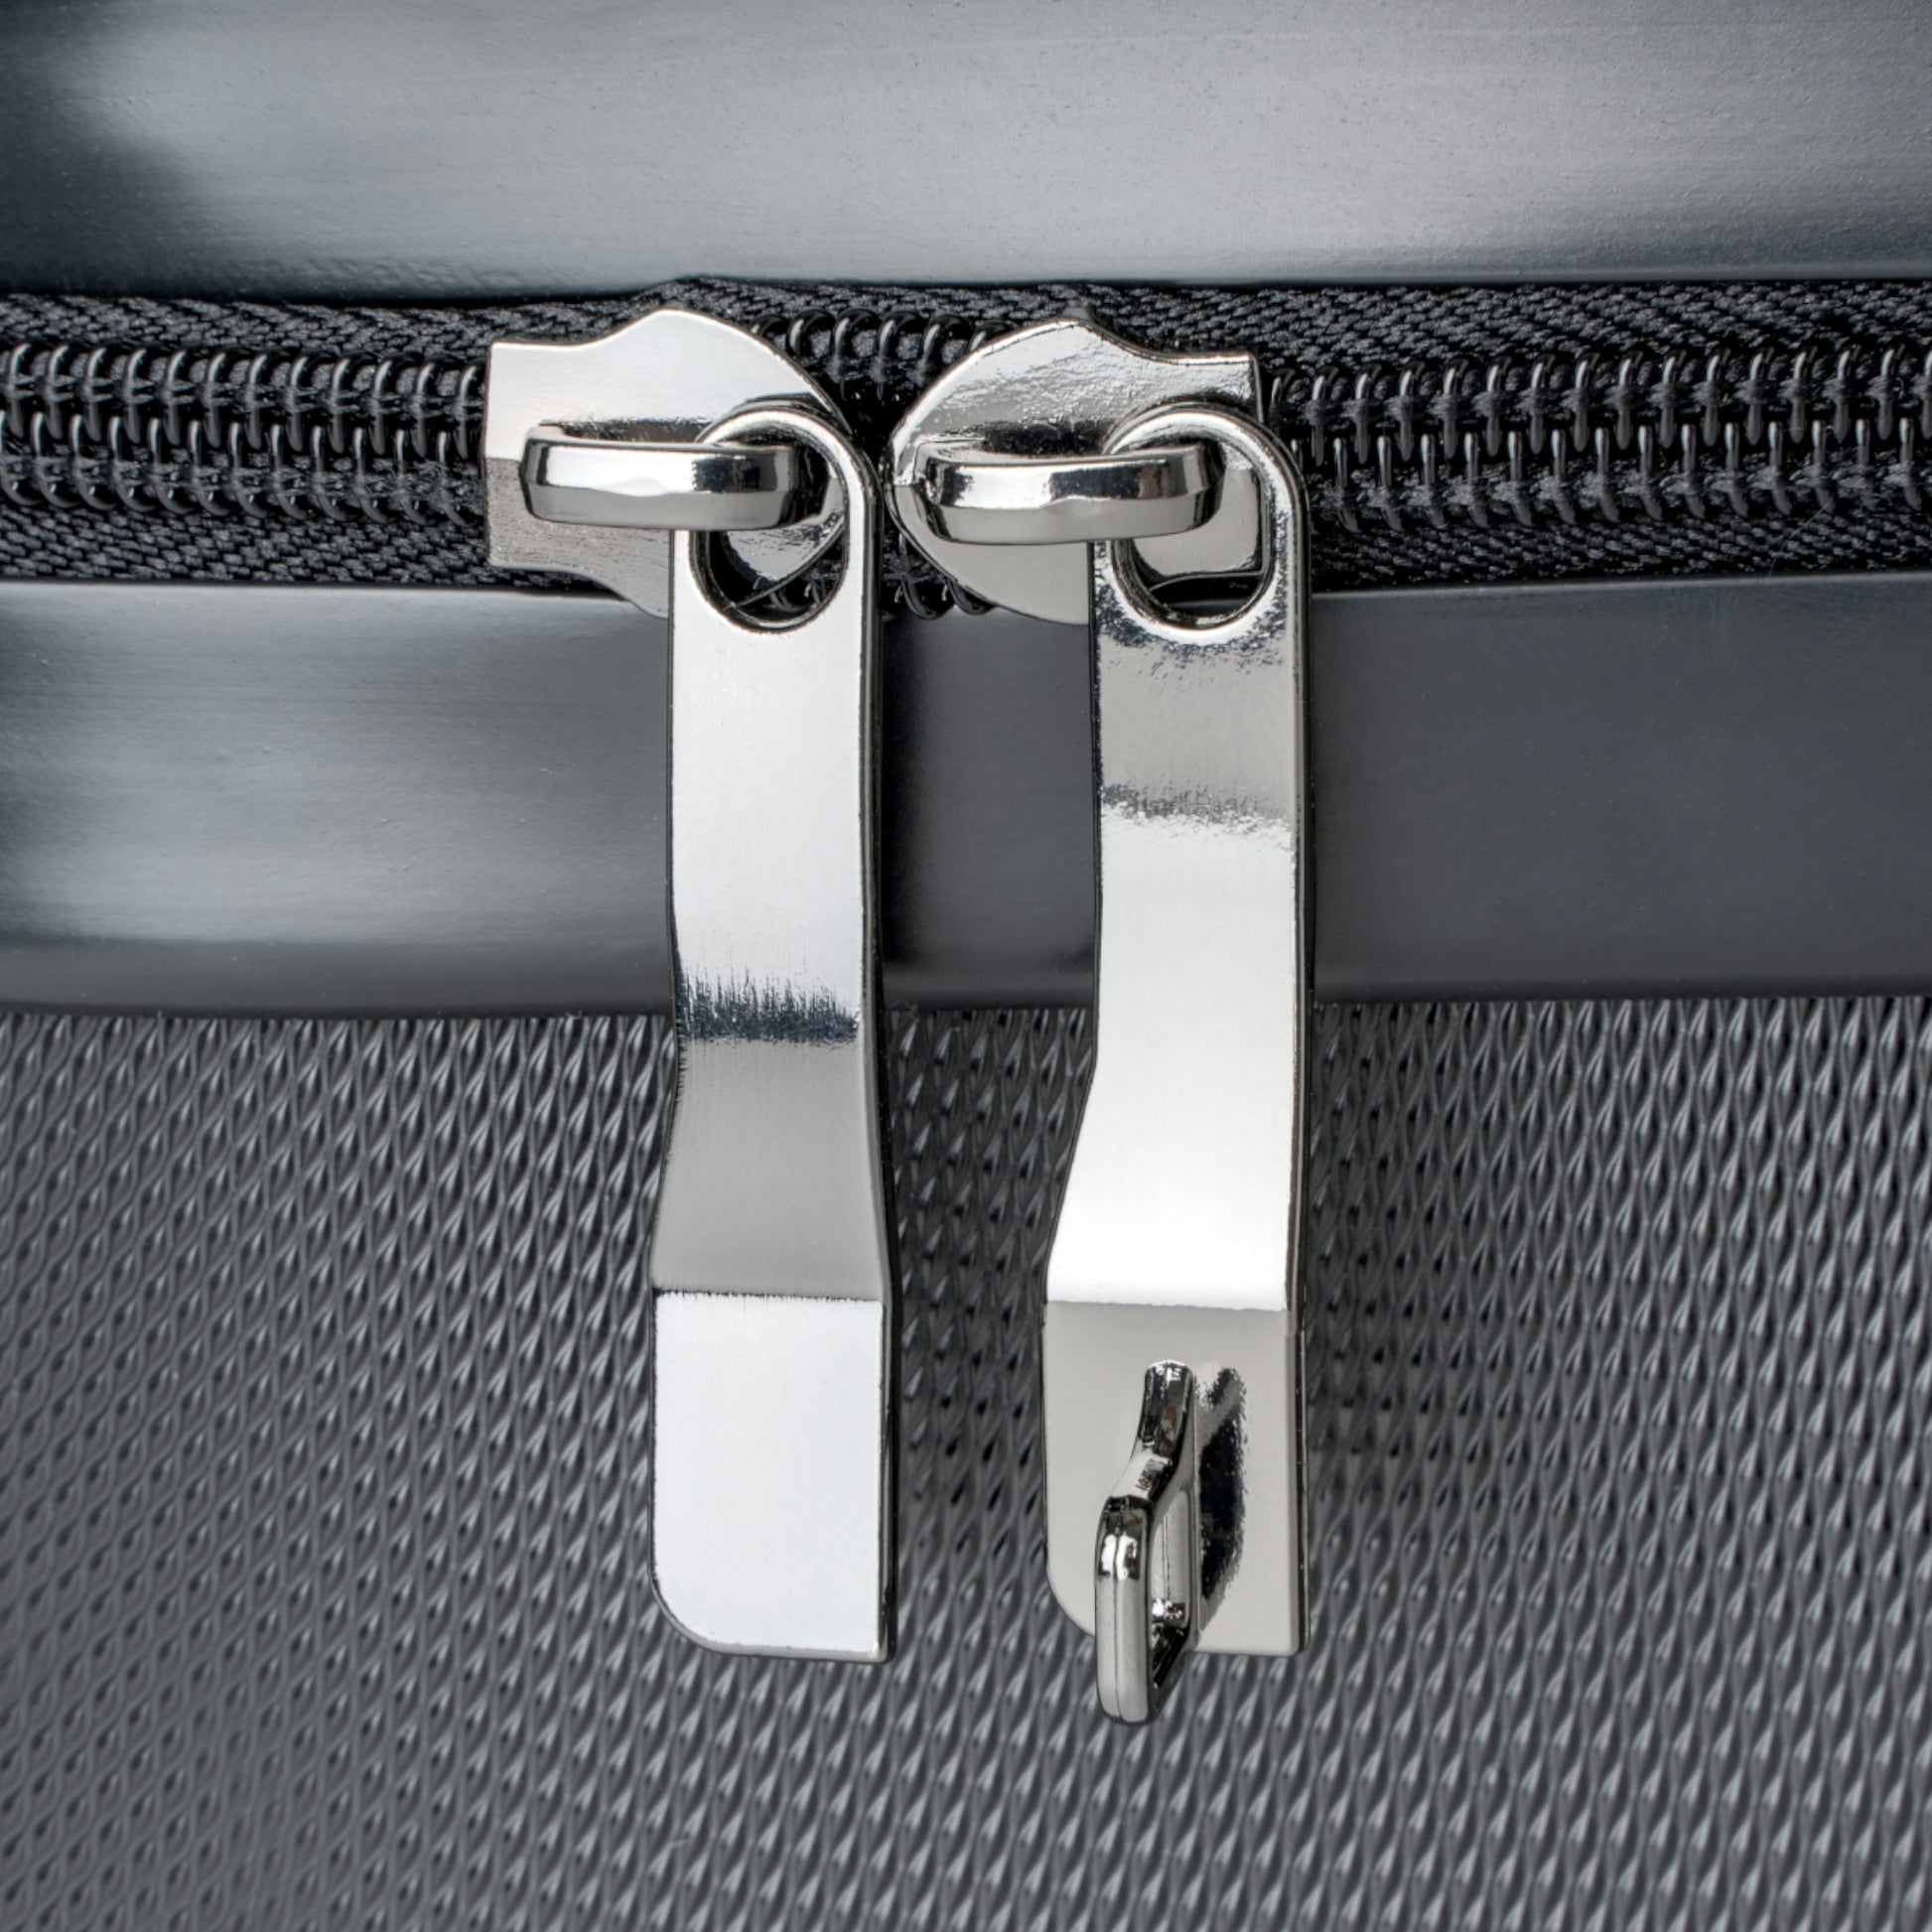 Geotrott Philadelphia Eagles2 National Football League NFL Team Logo Cabin Suitcase Rolling Luggage Checking Bag